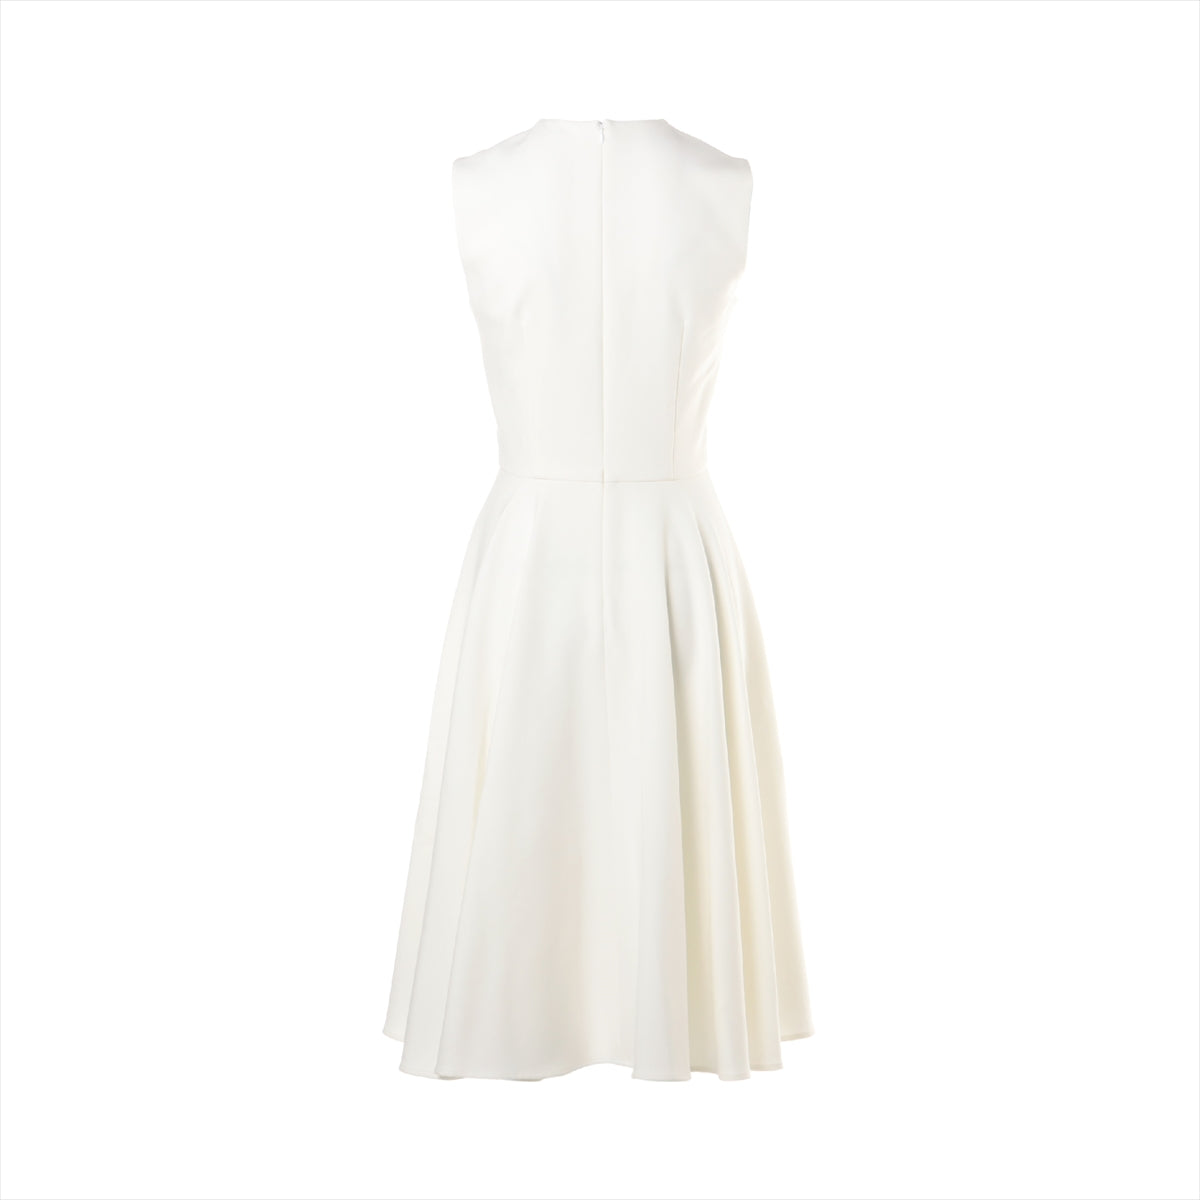 YOKO CHAN Polyester × Rayon Sleeveless dress 36 Ladies' White  YCD-420-717